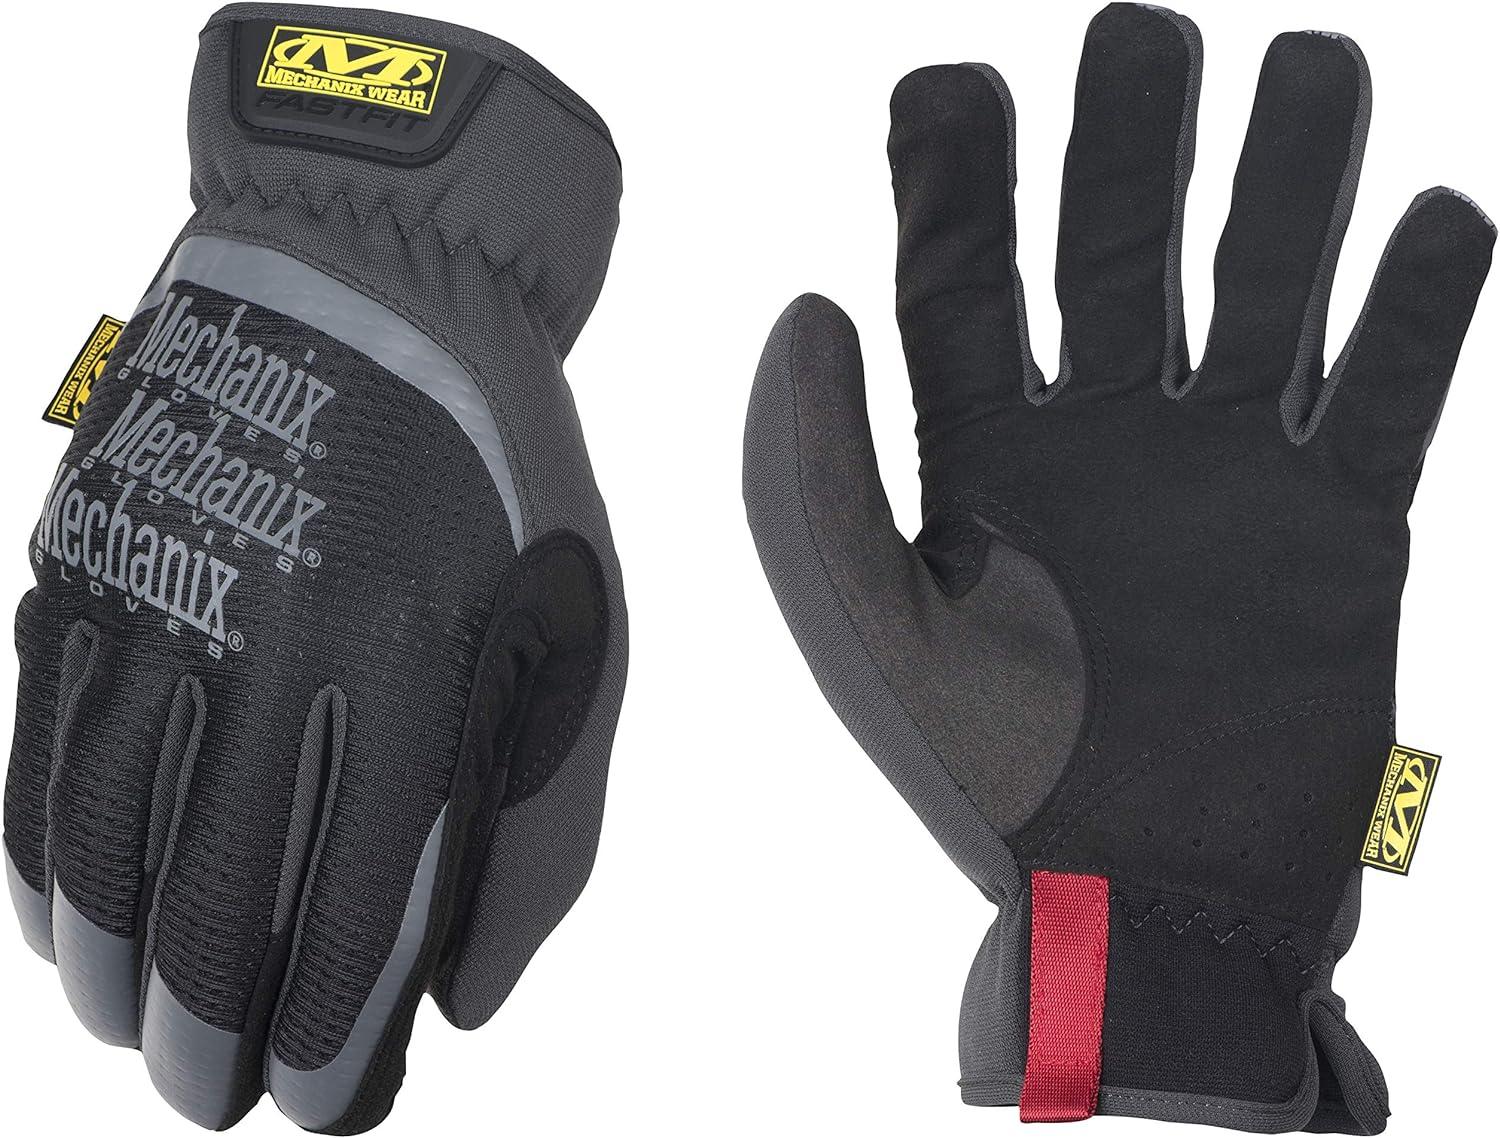 Mechanix Wear FastFit Work Gloves for $8.02 Shipped